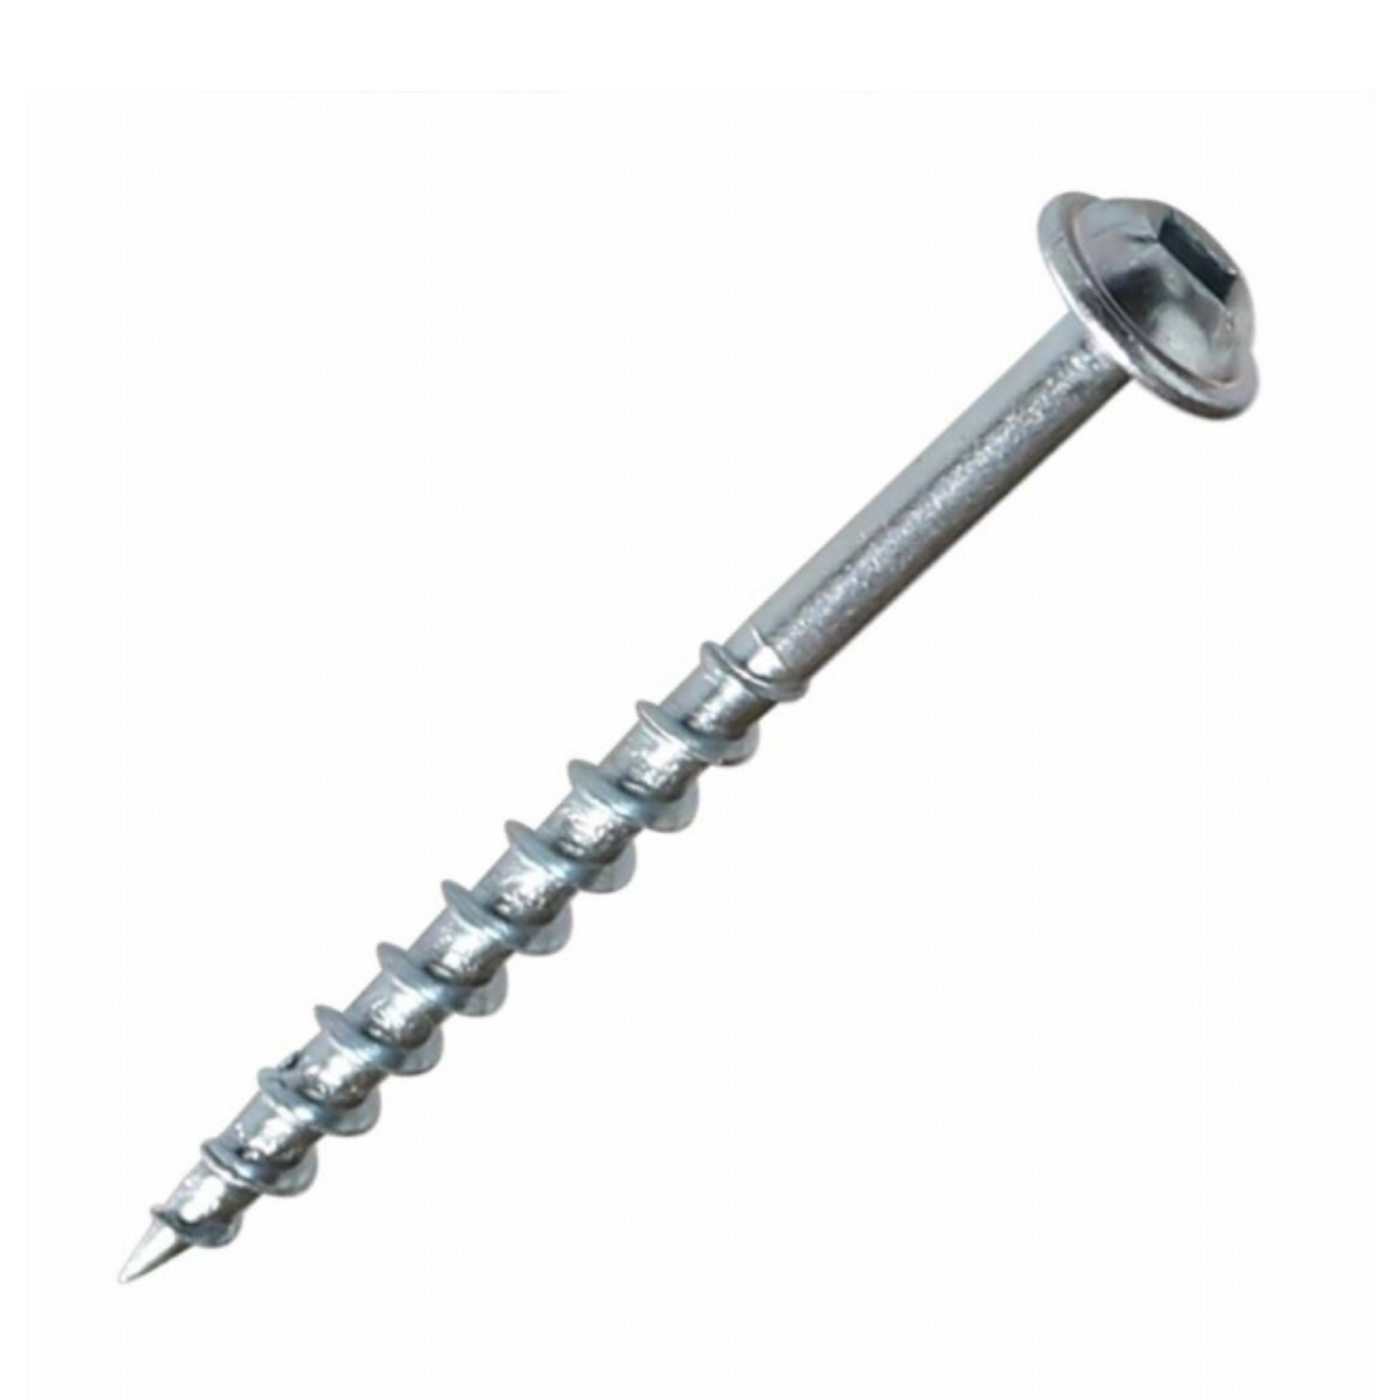 2'' Coarse Thread #8 Zinc Pocket Hole Screws - 100 Screws